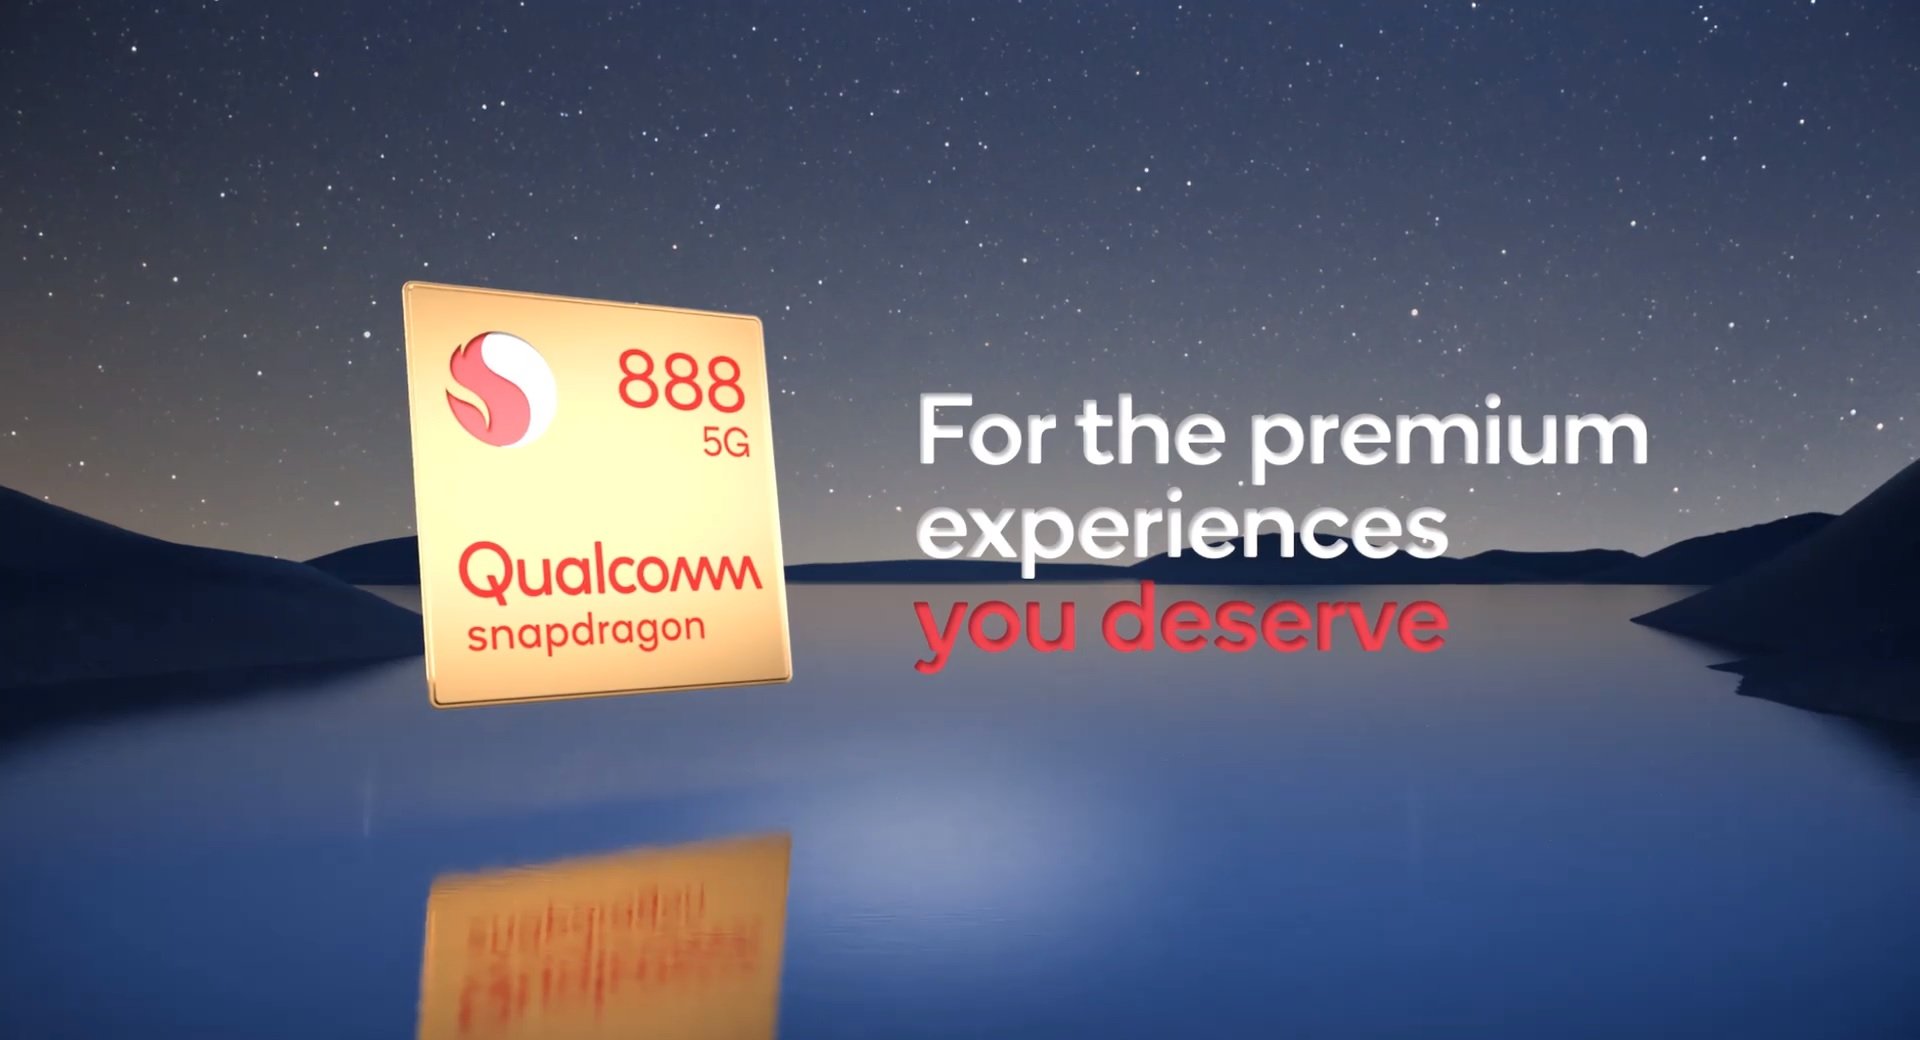 procesor Qualcomm Snapdragon 888 processor